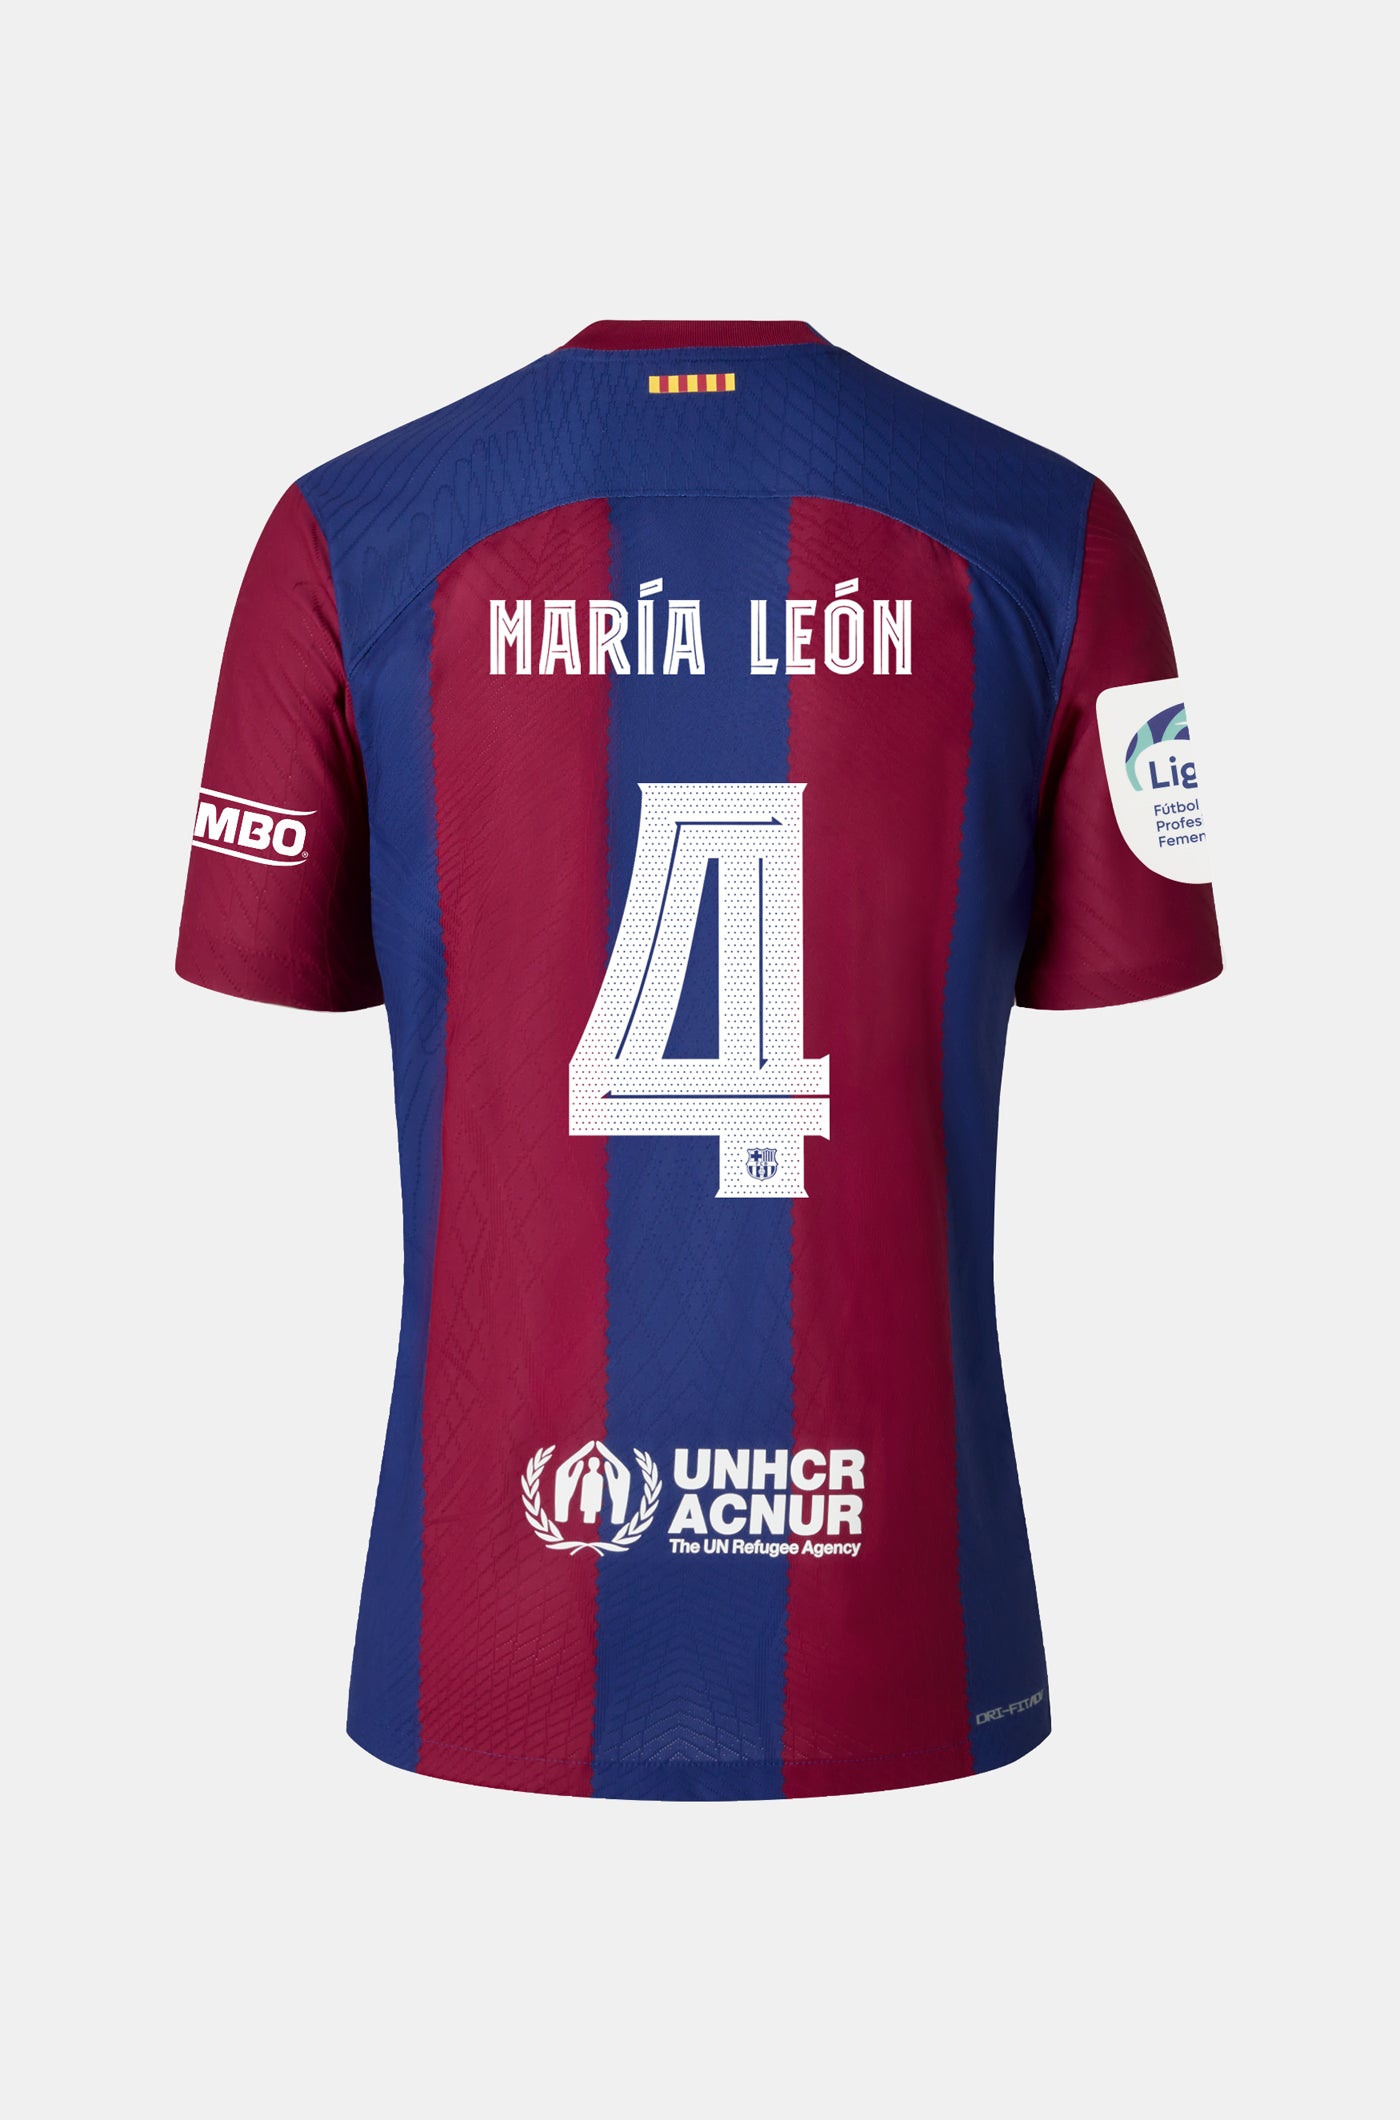 Liga F FC Barcelona home shirt 23/24 Player's Edition - MARÍA LEÓN